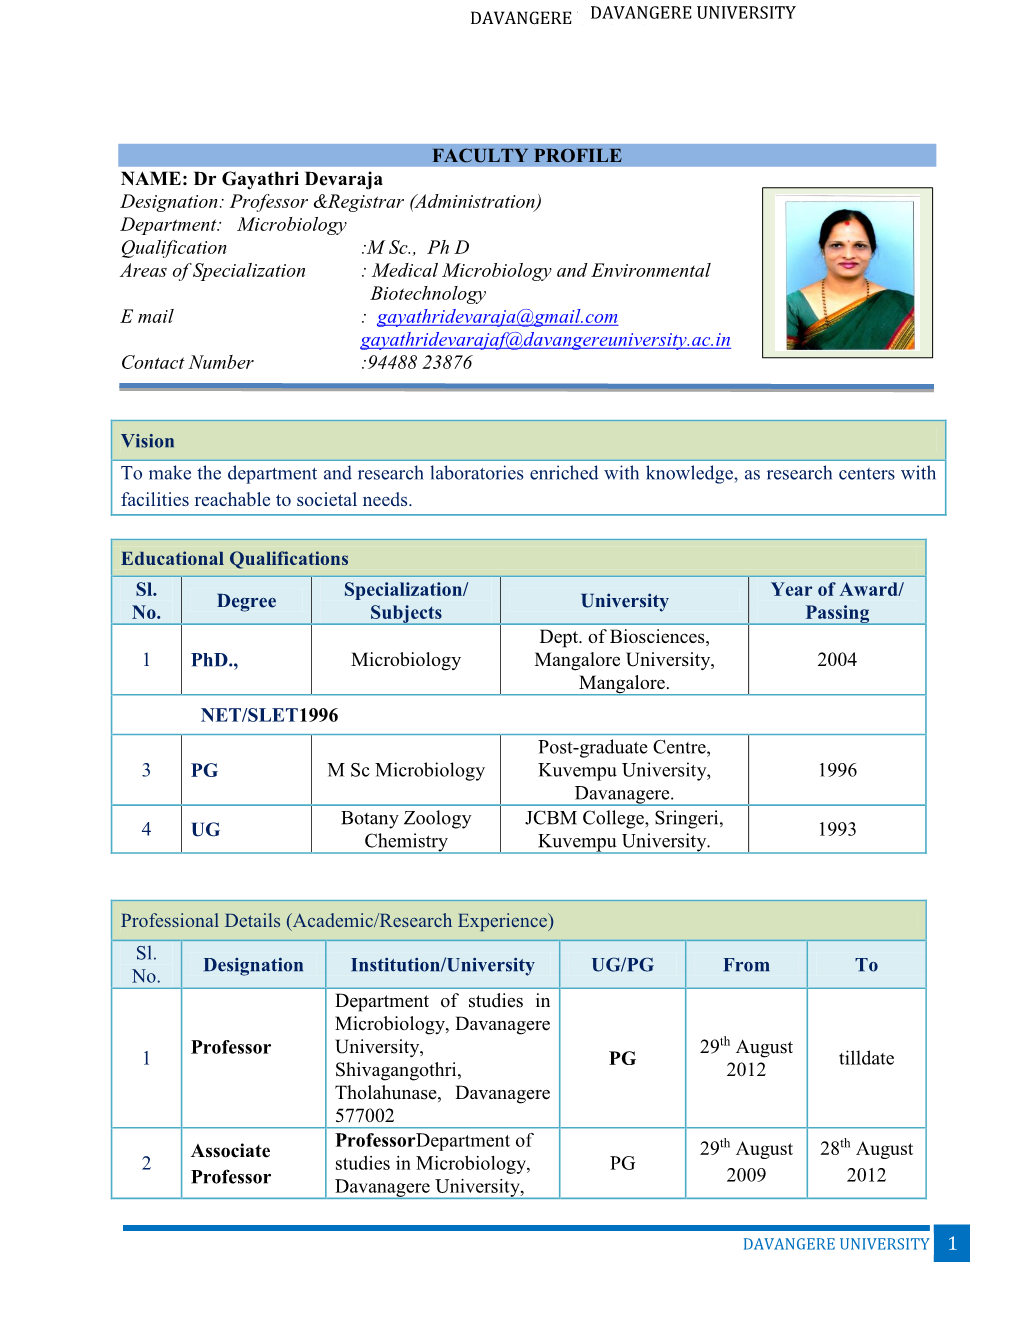 Dr Gayathri Devaraja Designation